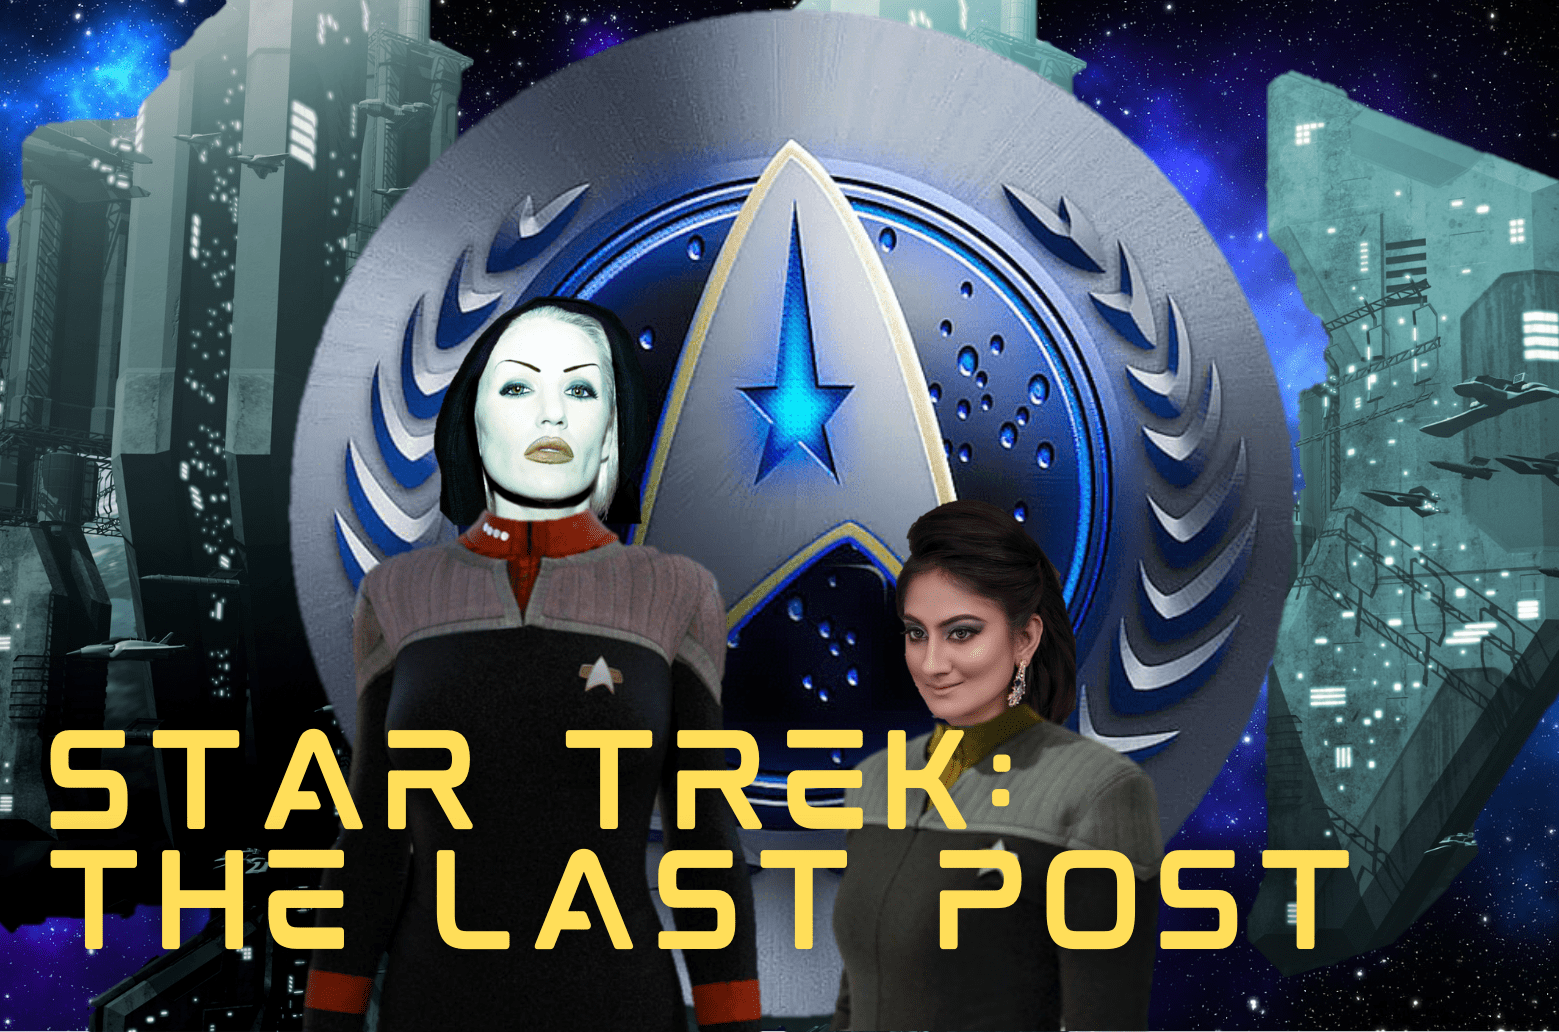 Star Trek: The Last Post